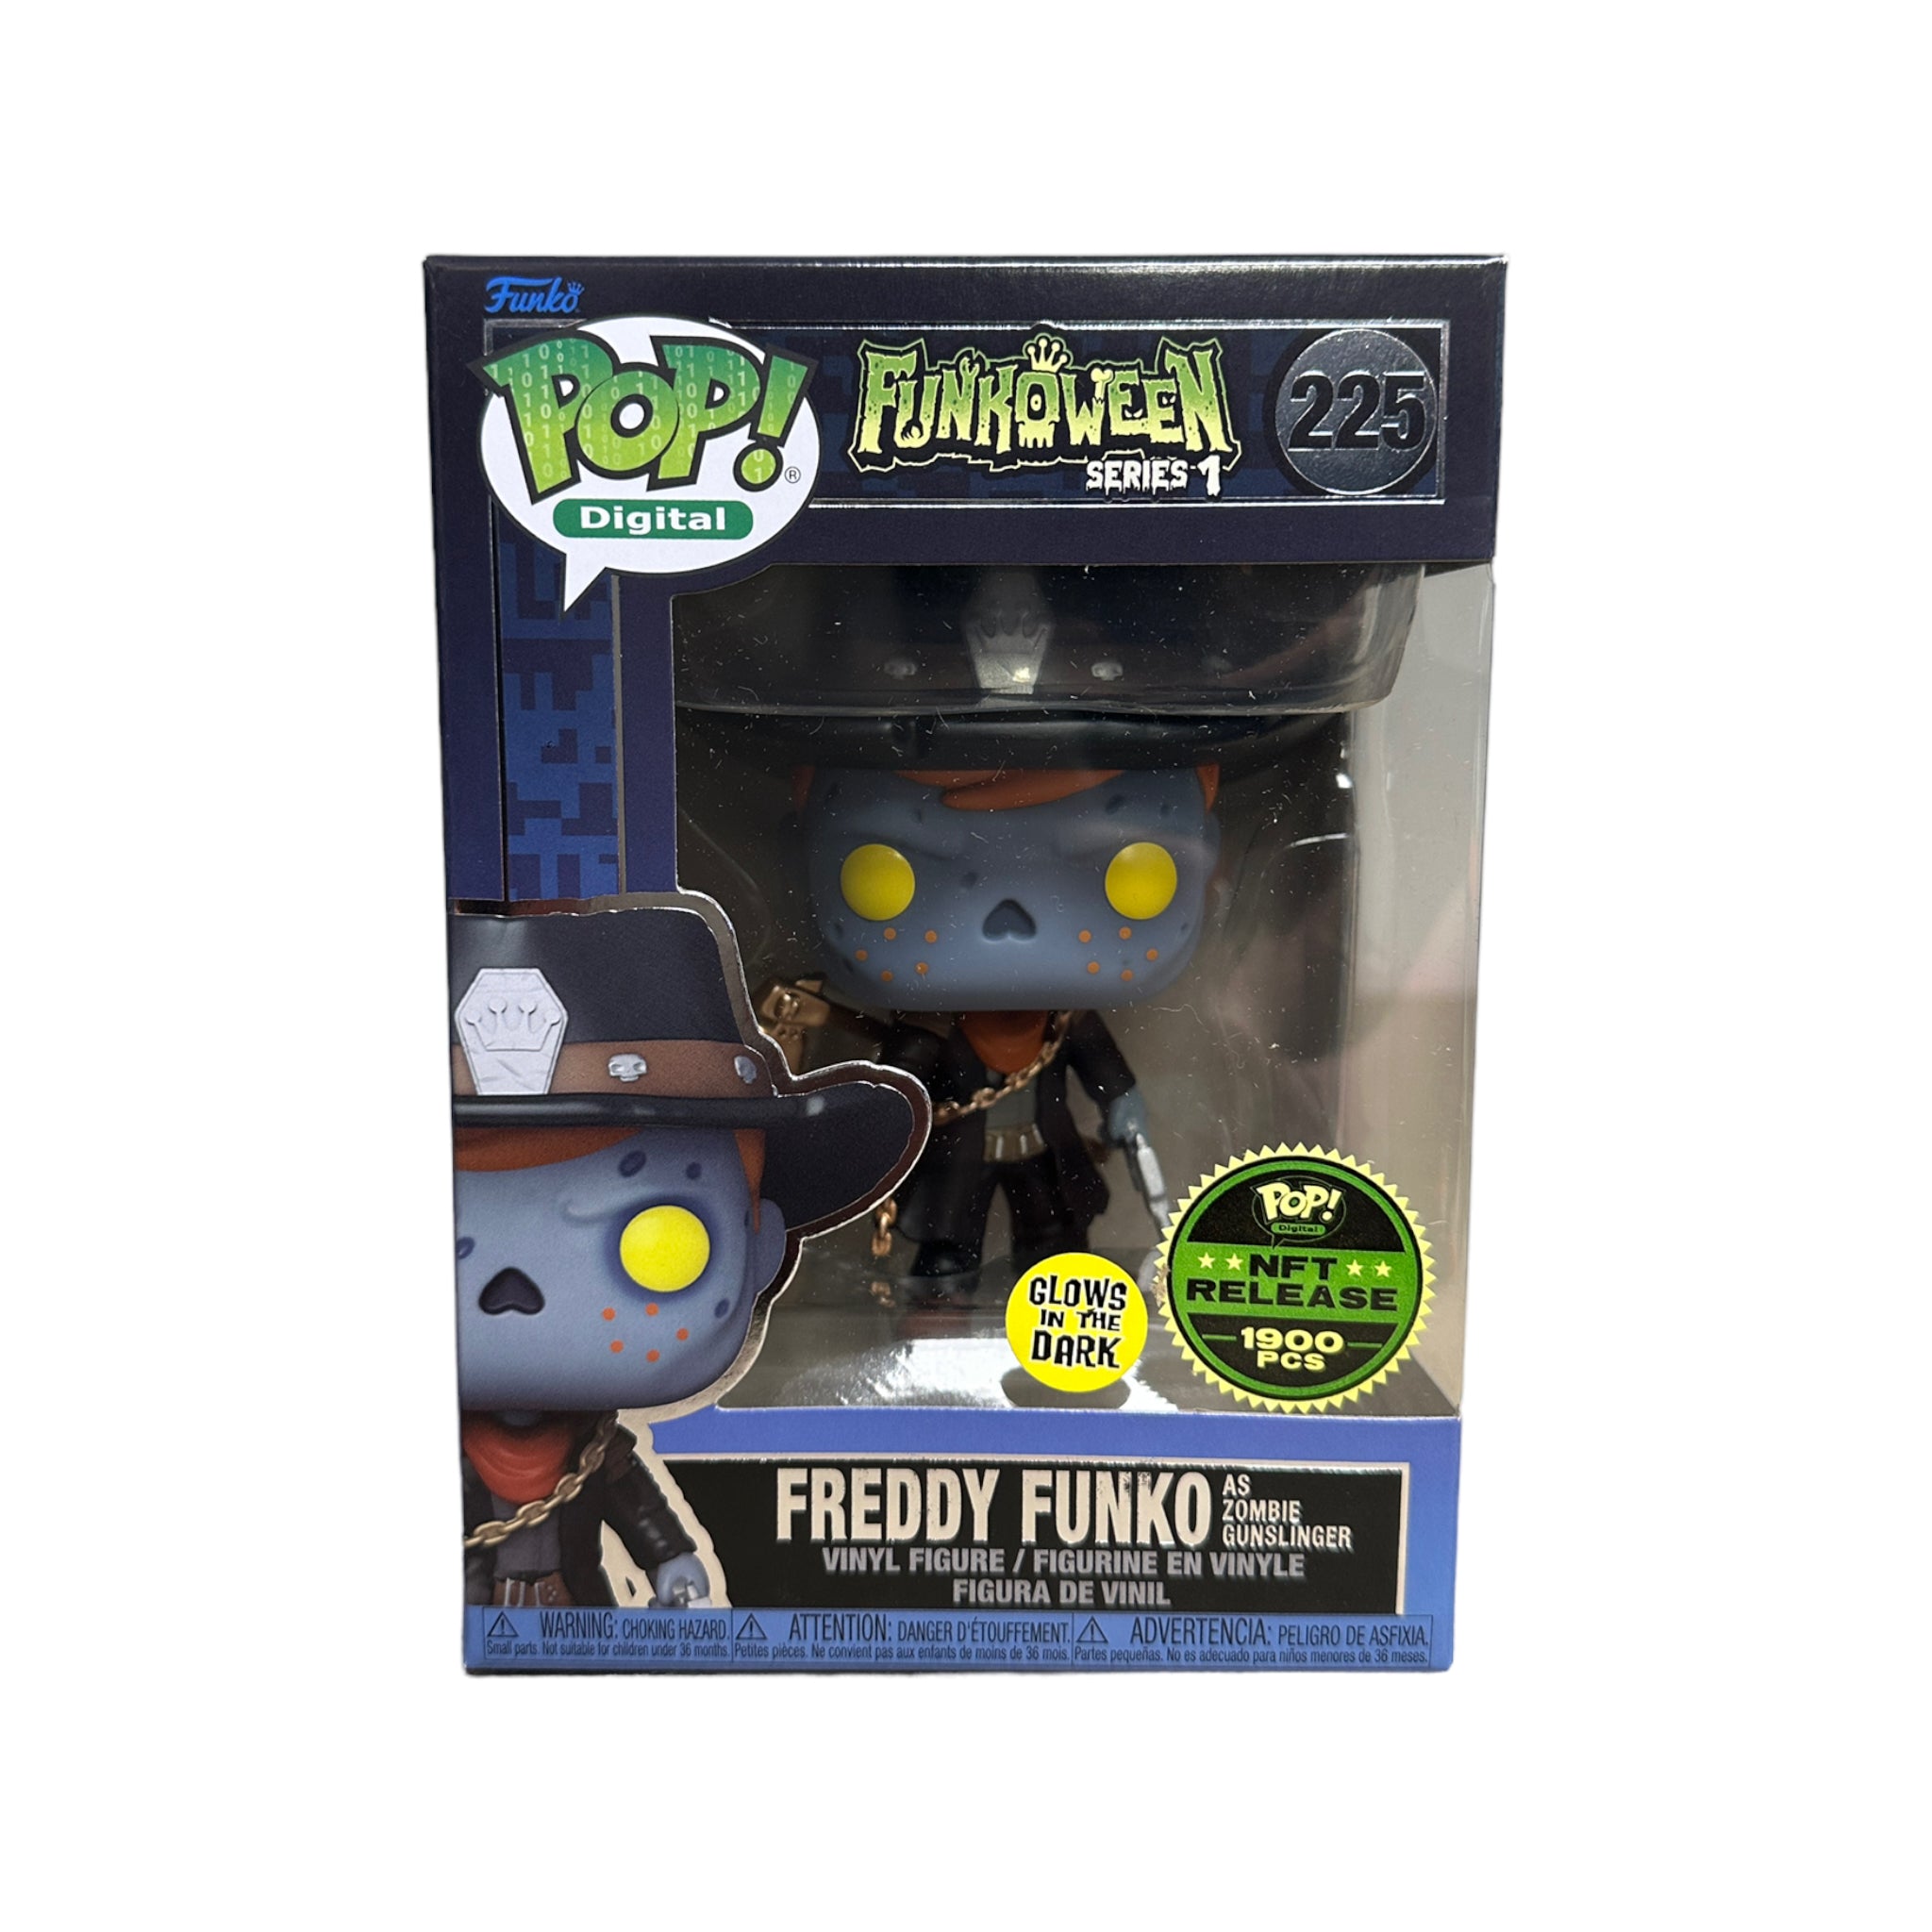 Freddy Funko as Zombie Gunslinger #225 (Glows in the Dark) Funko Pop! - Funkoween Series 1 - NFT Release Exclusive LE1900 Pcs - Condition 8.5/10